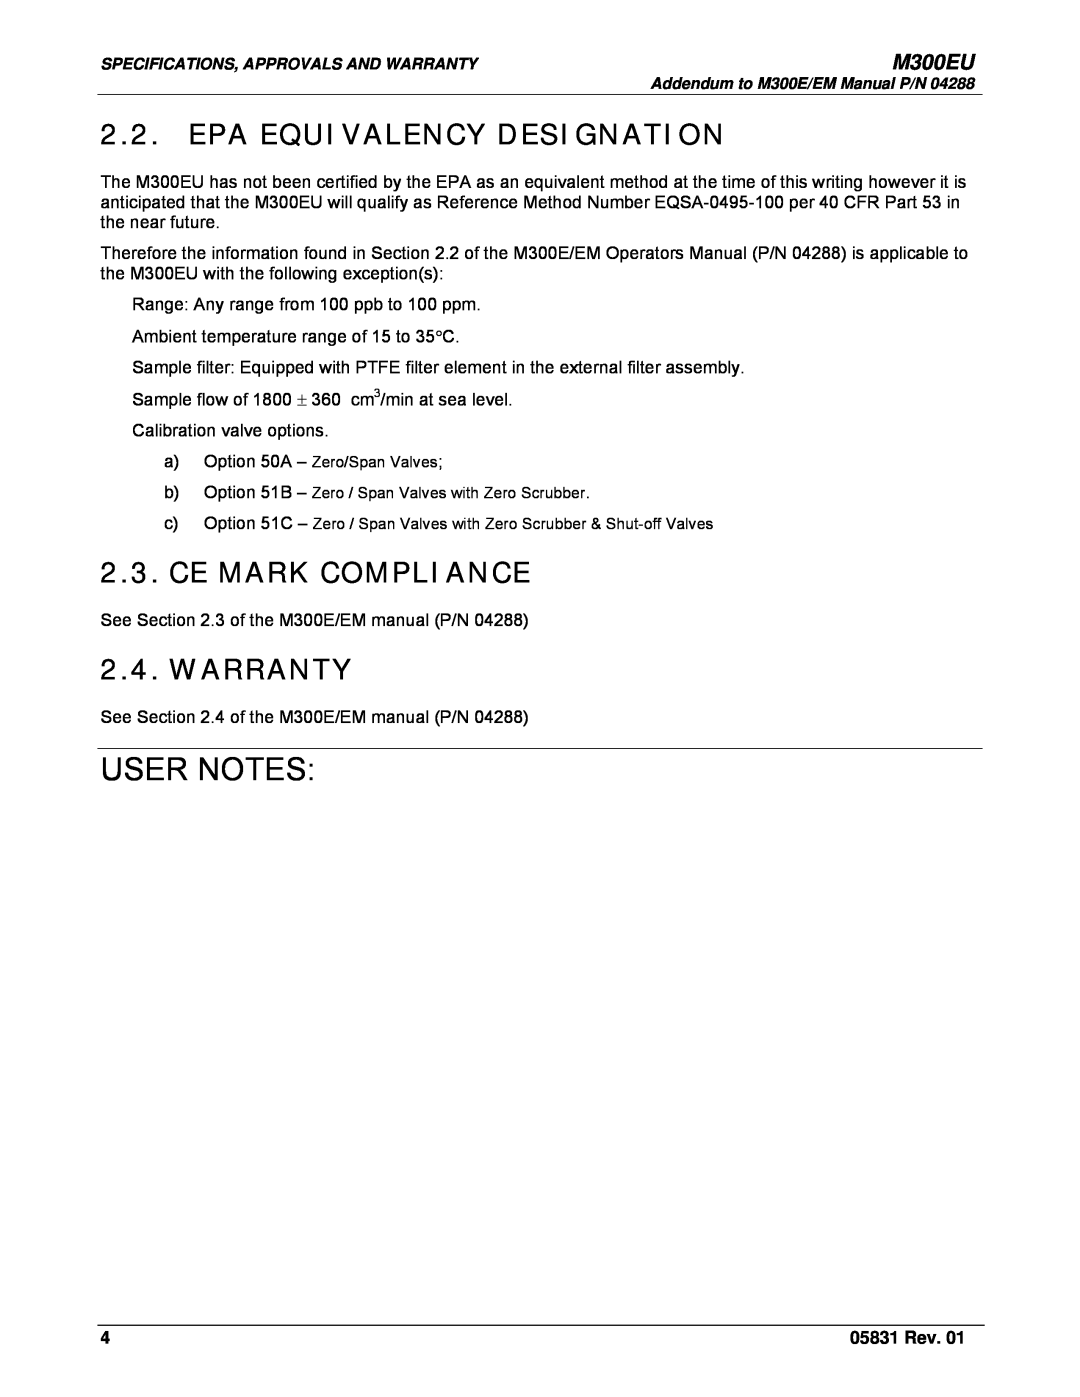 Teledyne Model 300EU manual Epa Equivalency Designation, Ce Mark Compliance, Warranty, User Notes, M300EU, 05831 Rev 